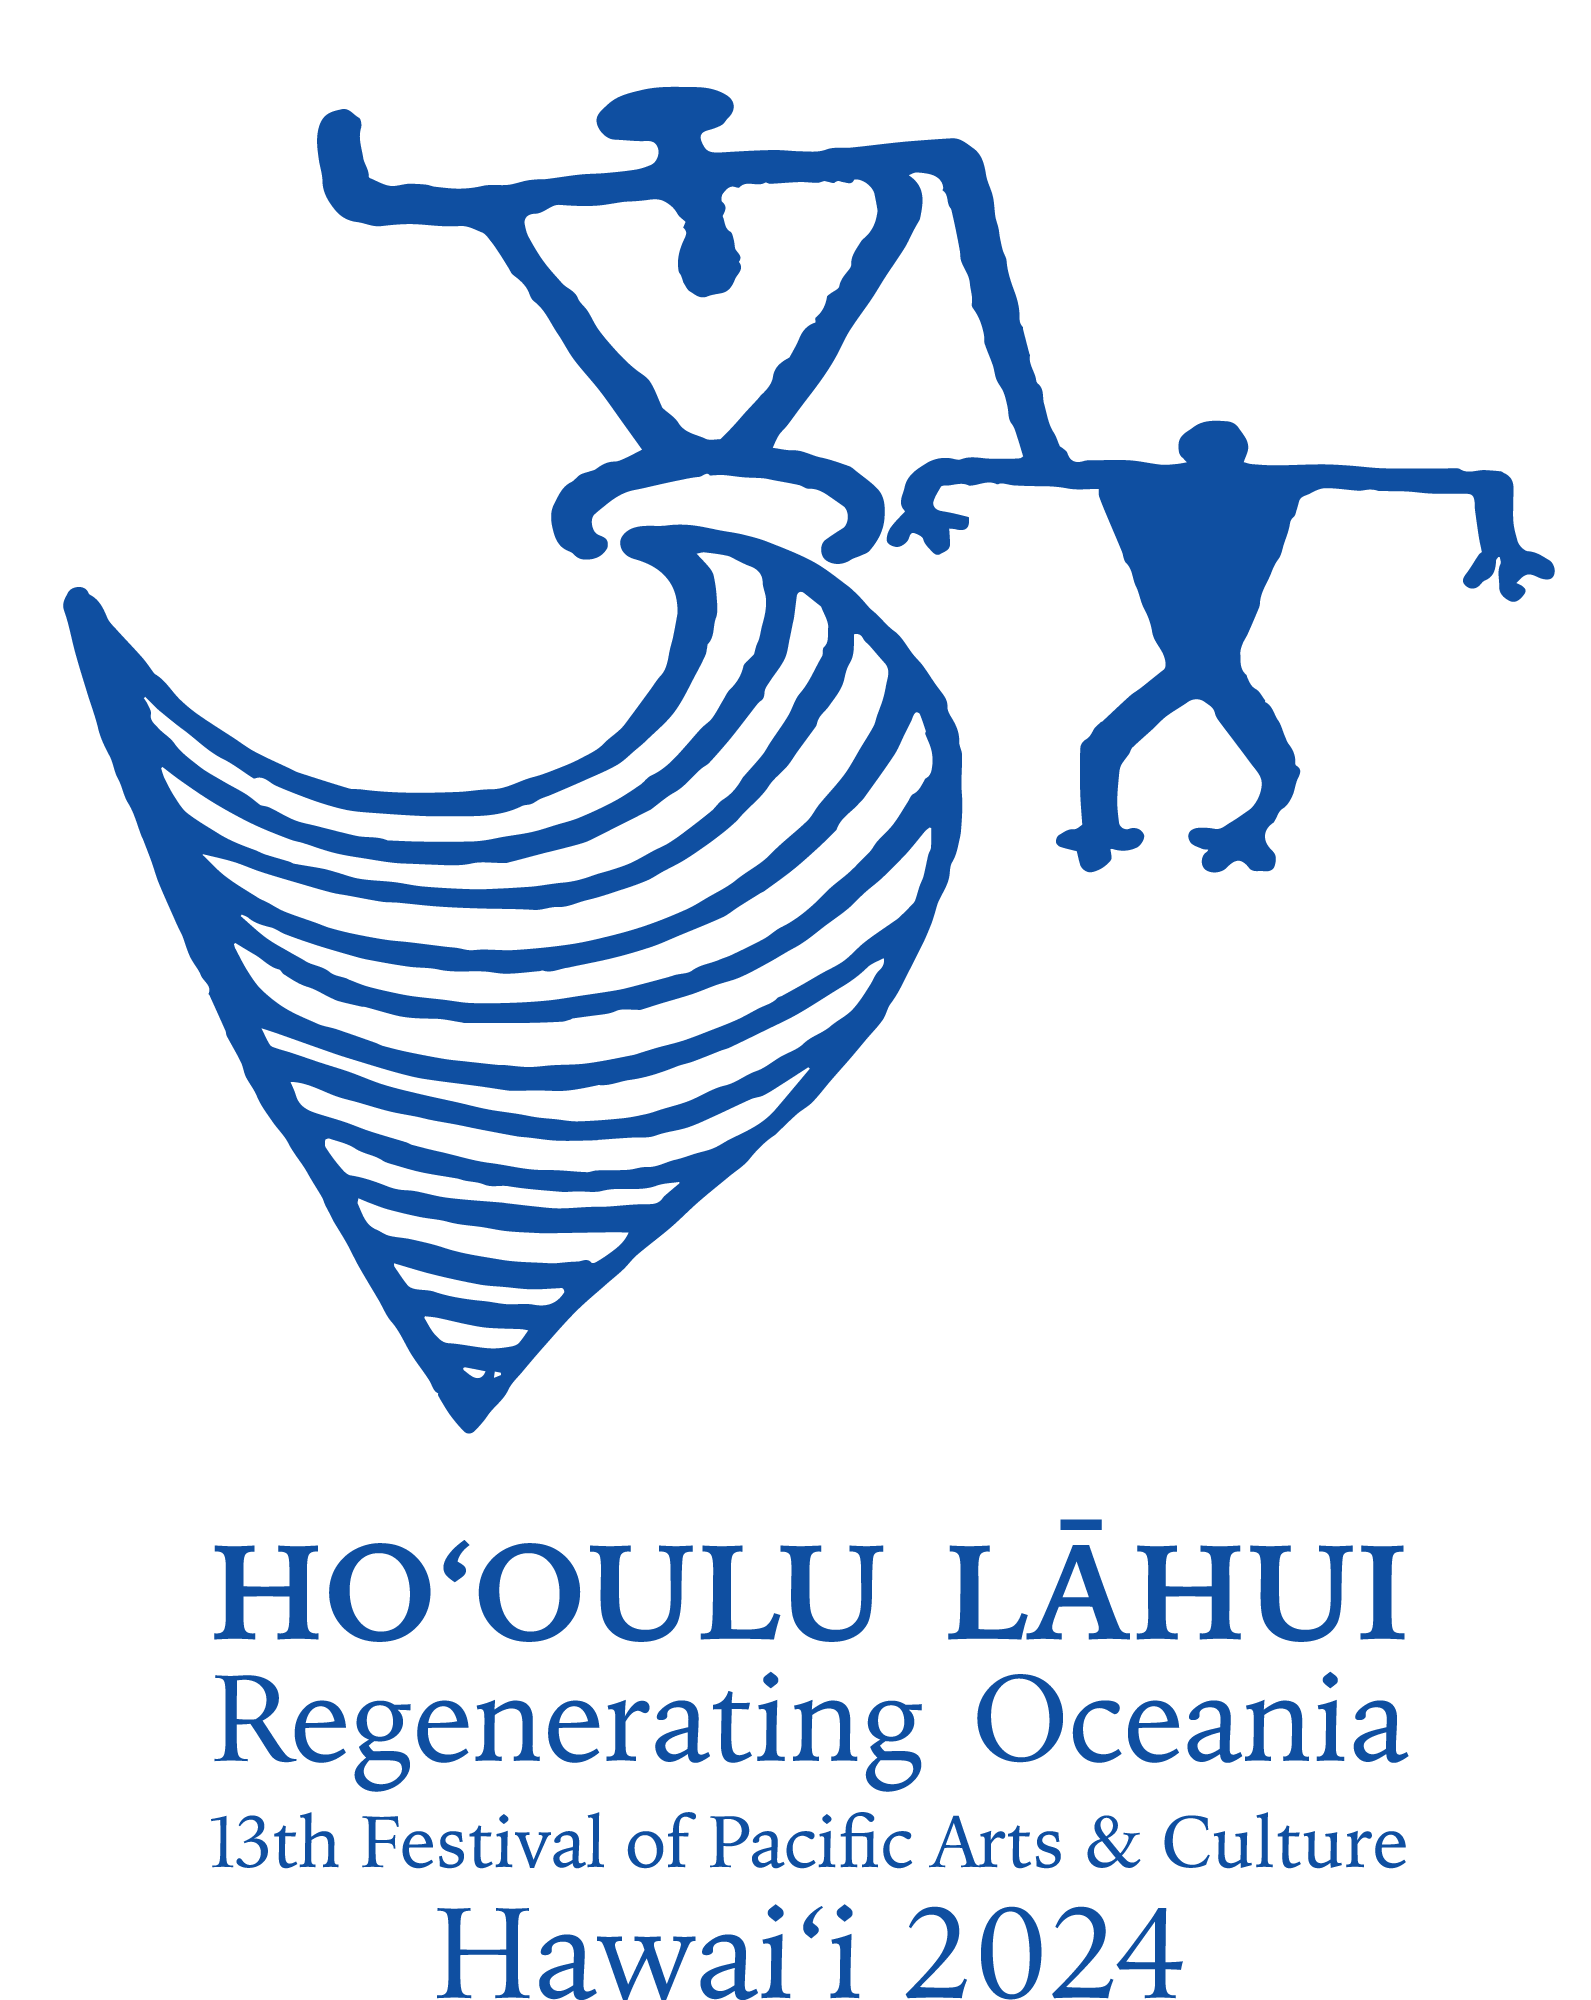 13th Festival of Pacific Arts & Culture — Native Hawaiian Hospitality